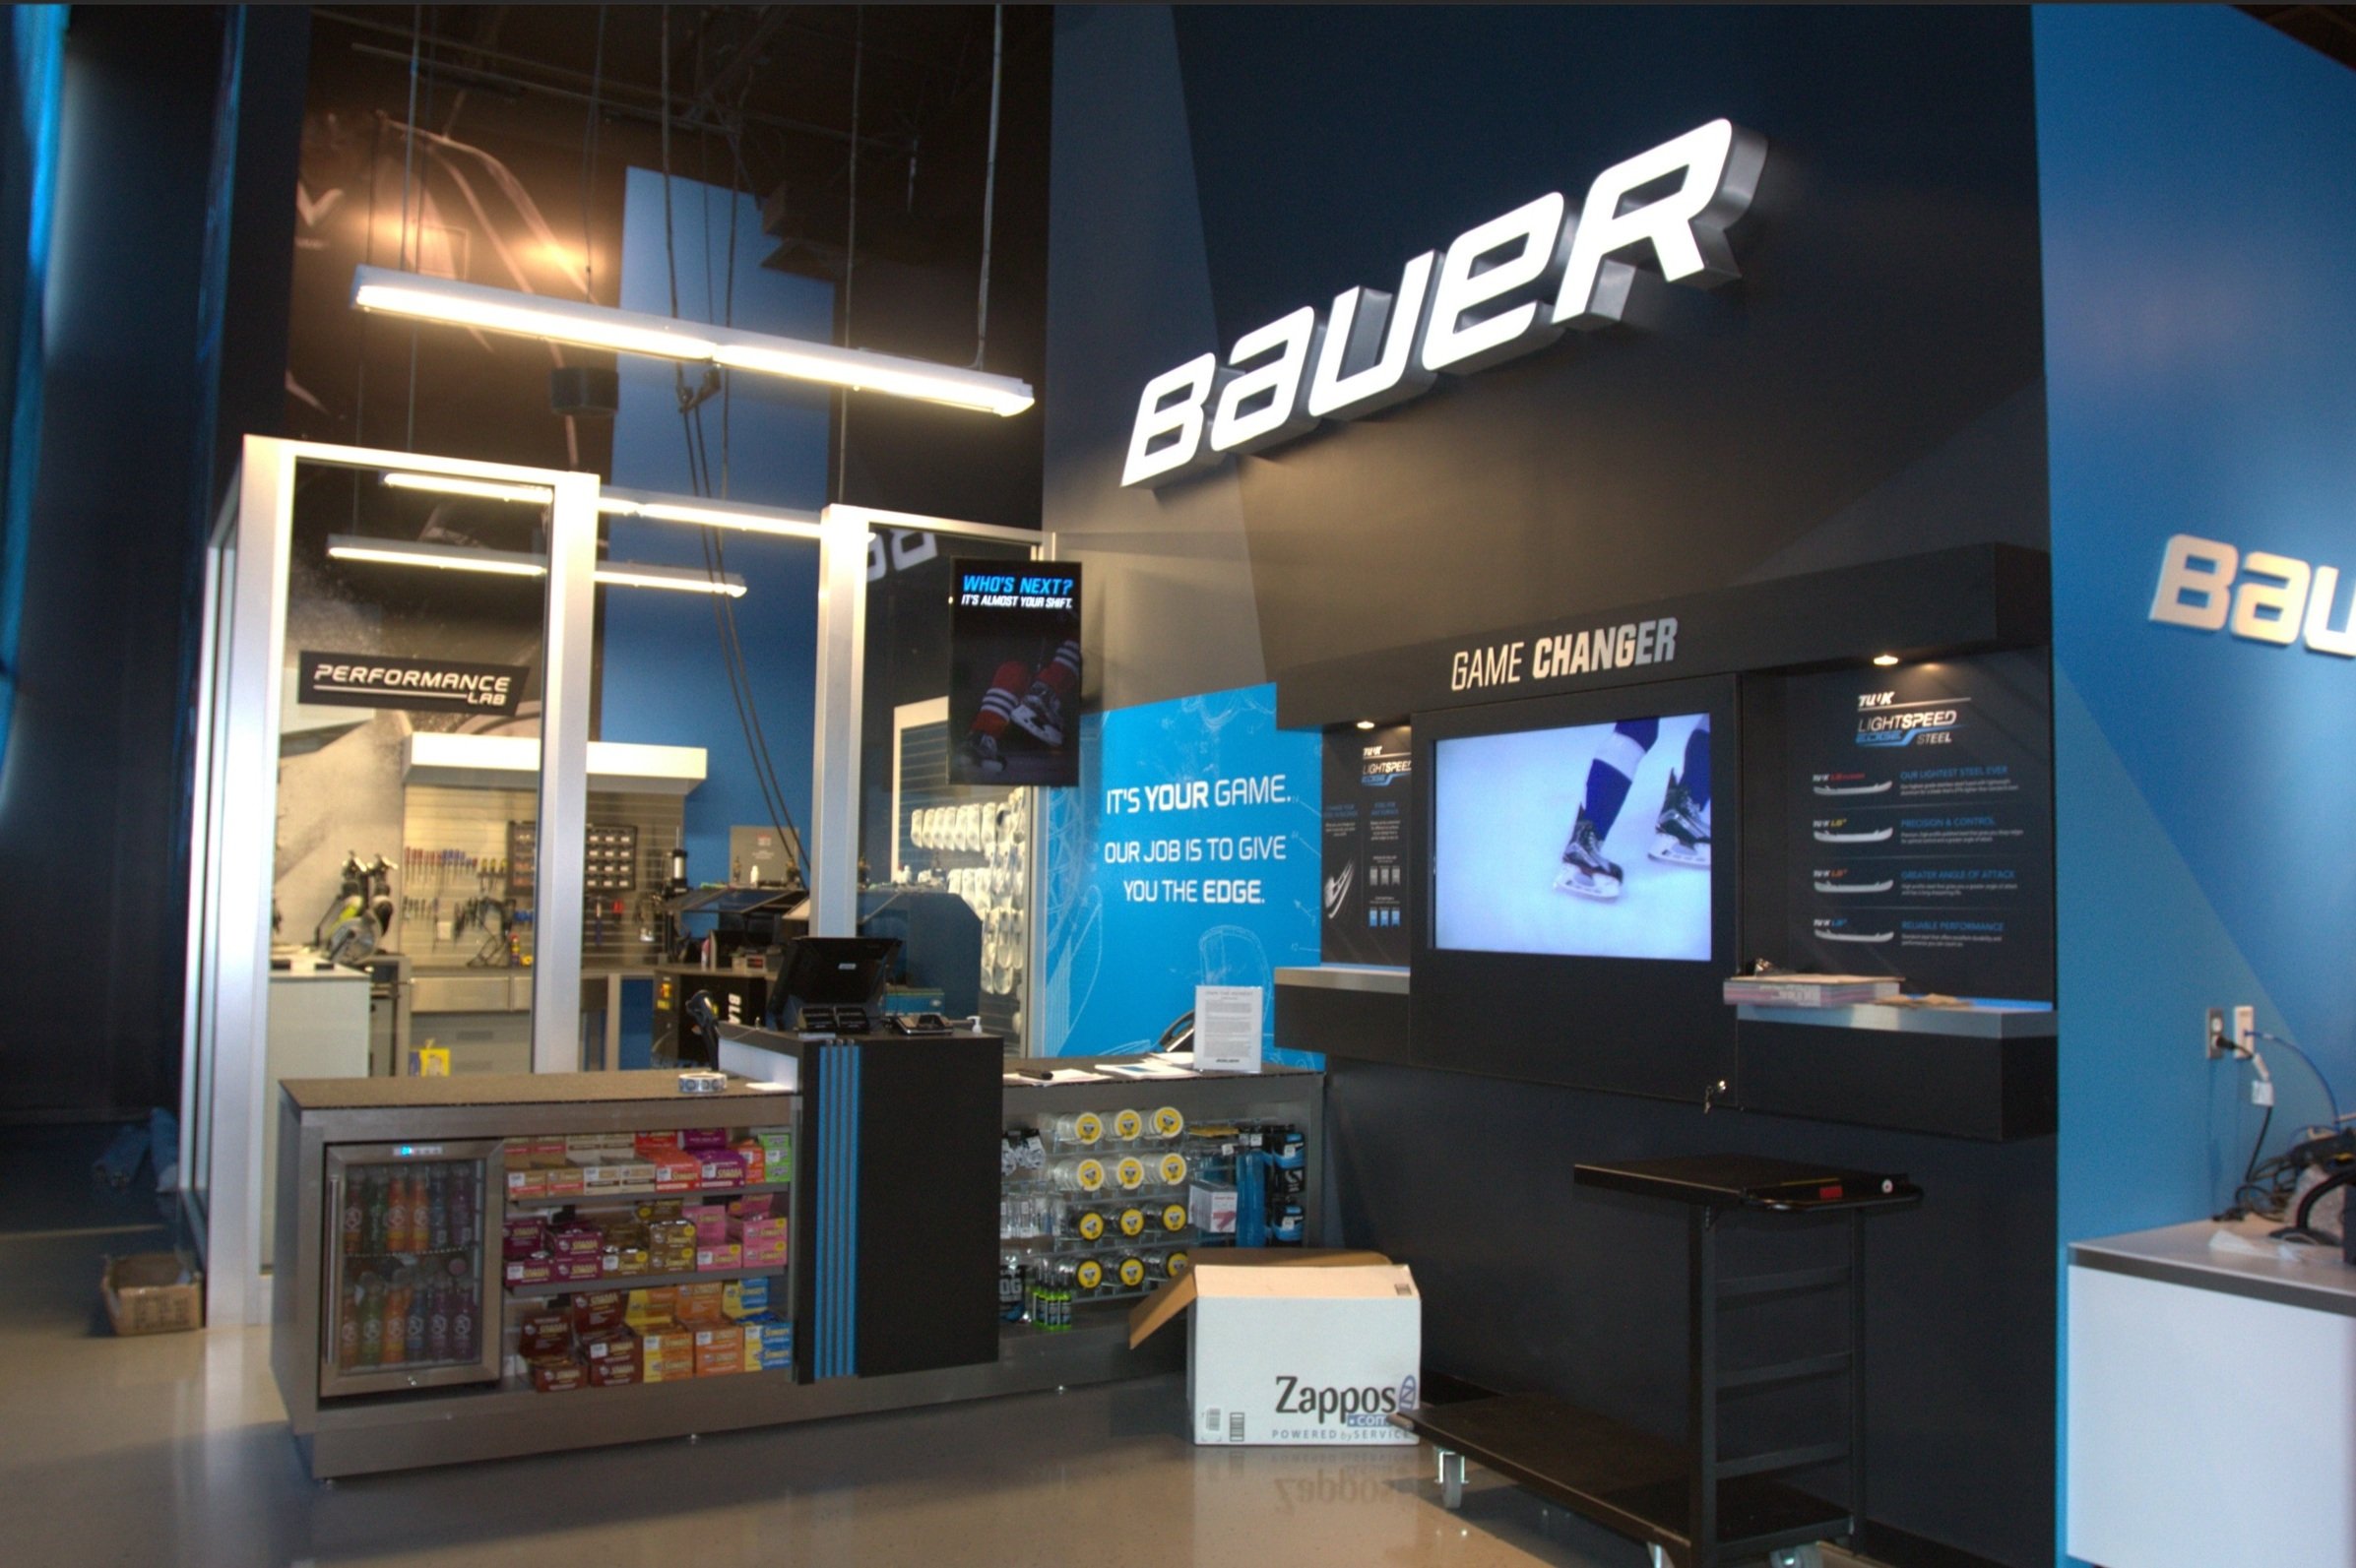 Bauer Store Project — MJ Development, Inc.